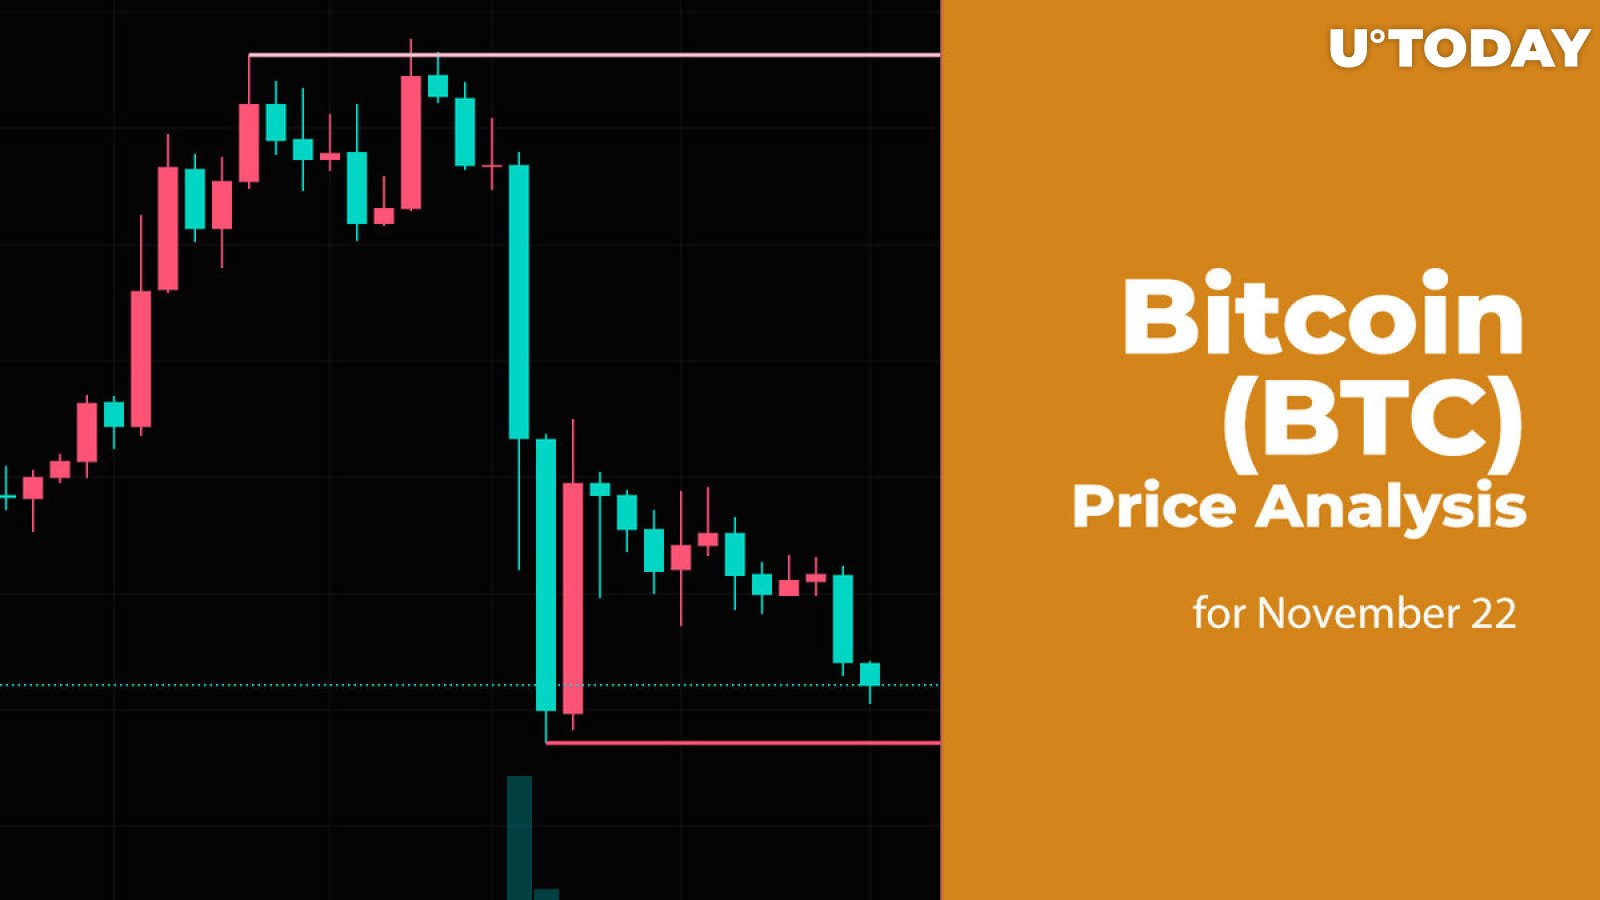 Bitcoin (BTC) Price Analysis for November 22